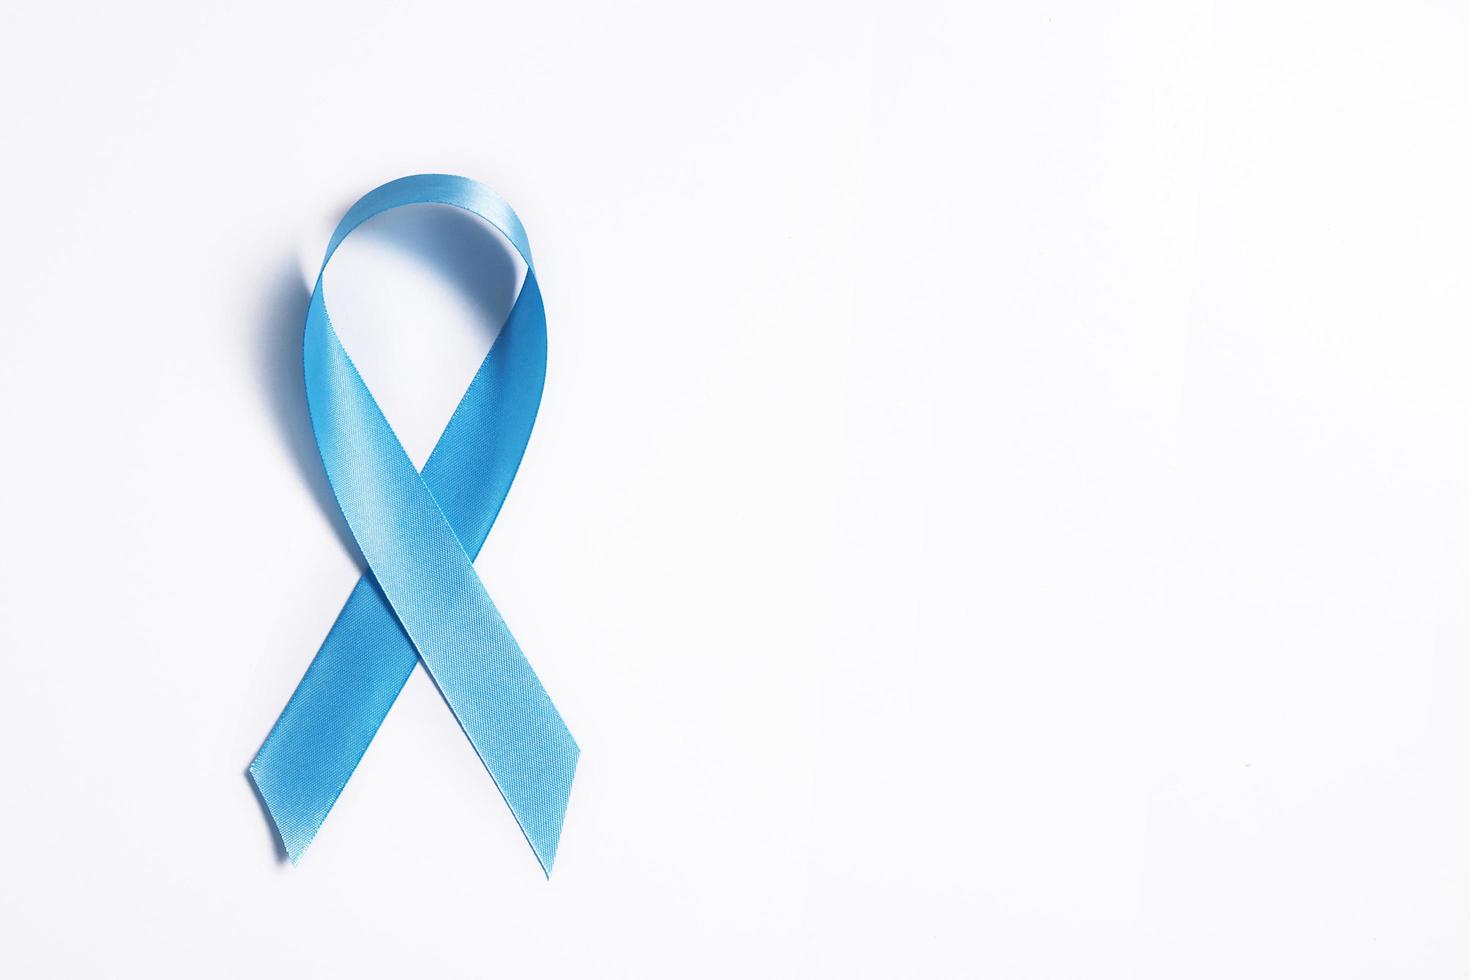 símbolo da fita azul no fundo branco do dia mundial da diabetes, 14 de novembro foto